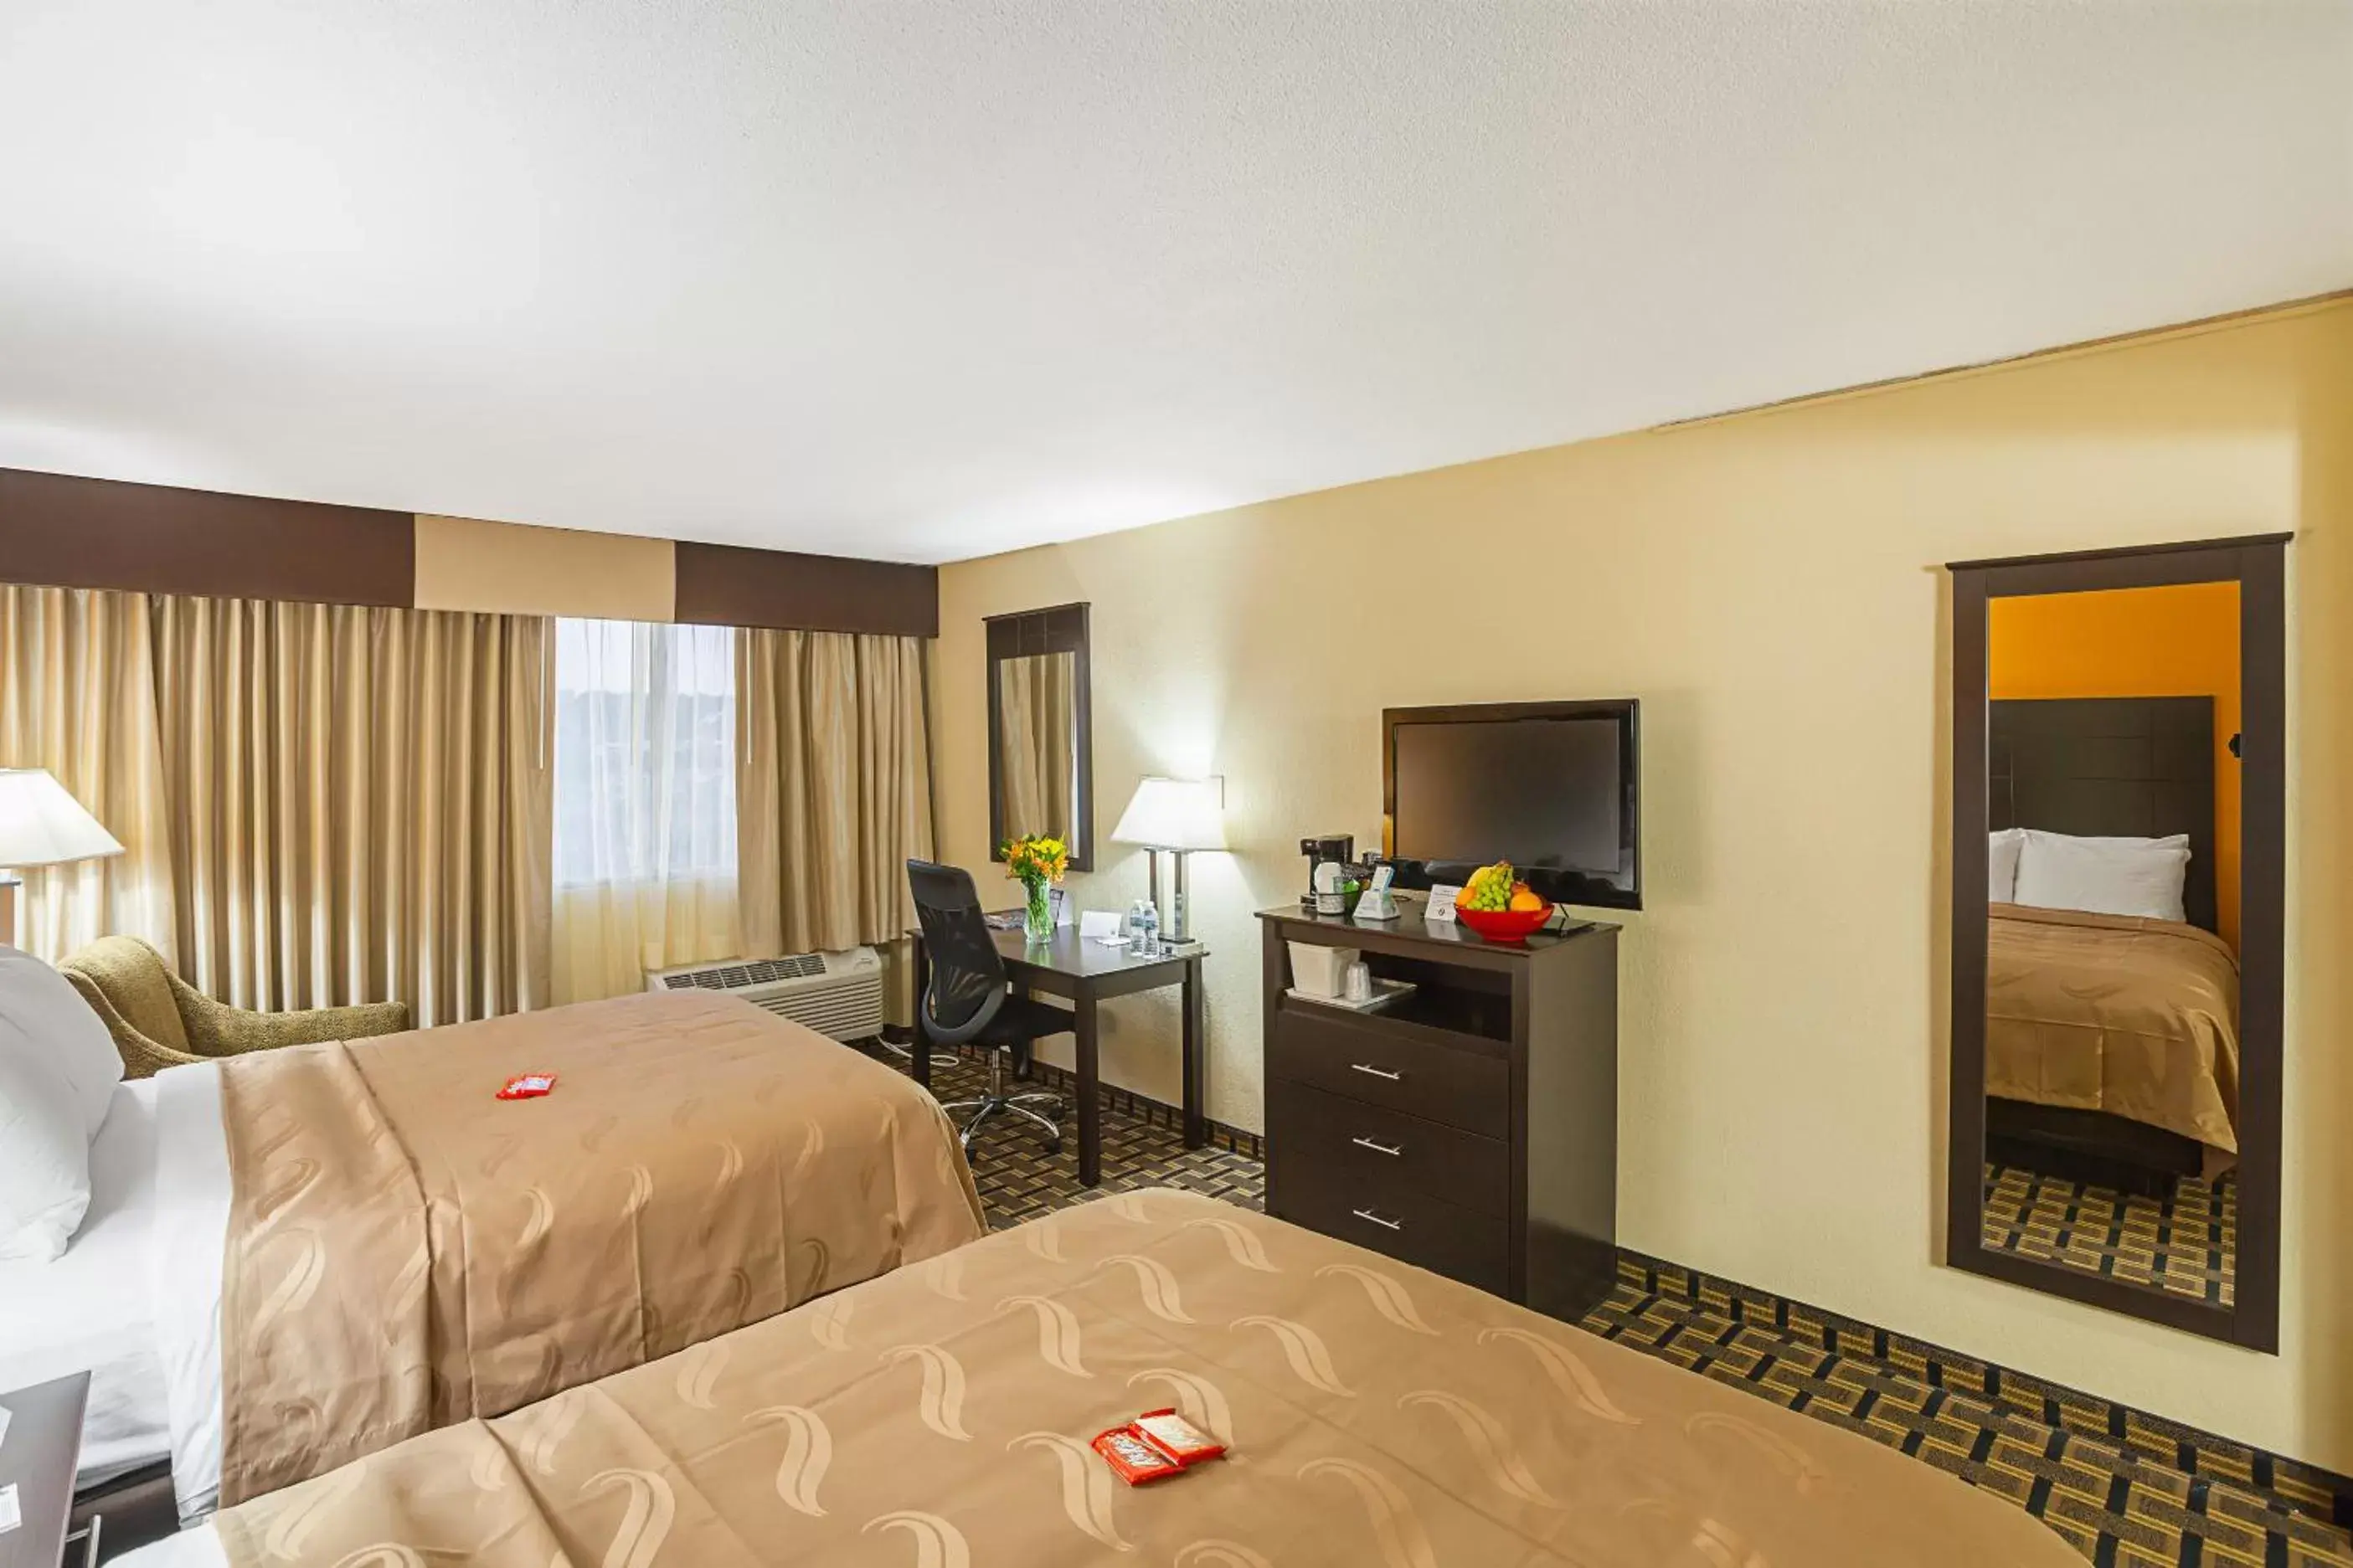 Deluxe Queen Room with Two Queen Beds - Non-Smoking in Quality Inn & Suites Cincinnati Downtown